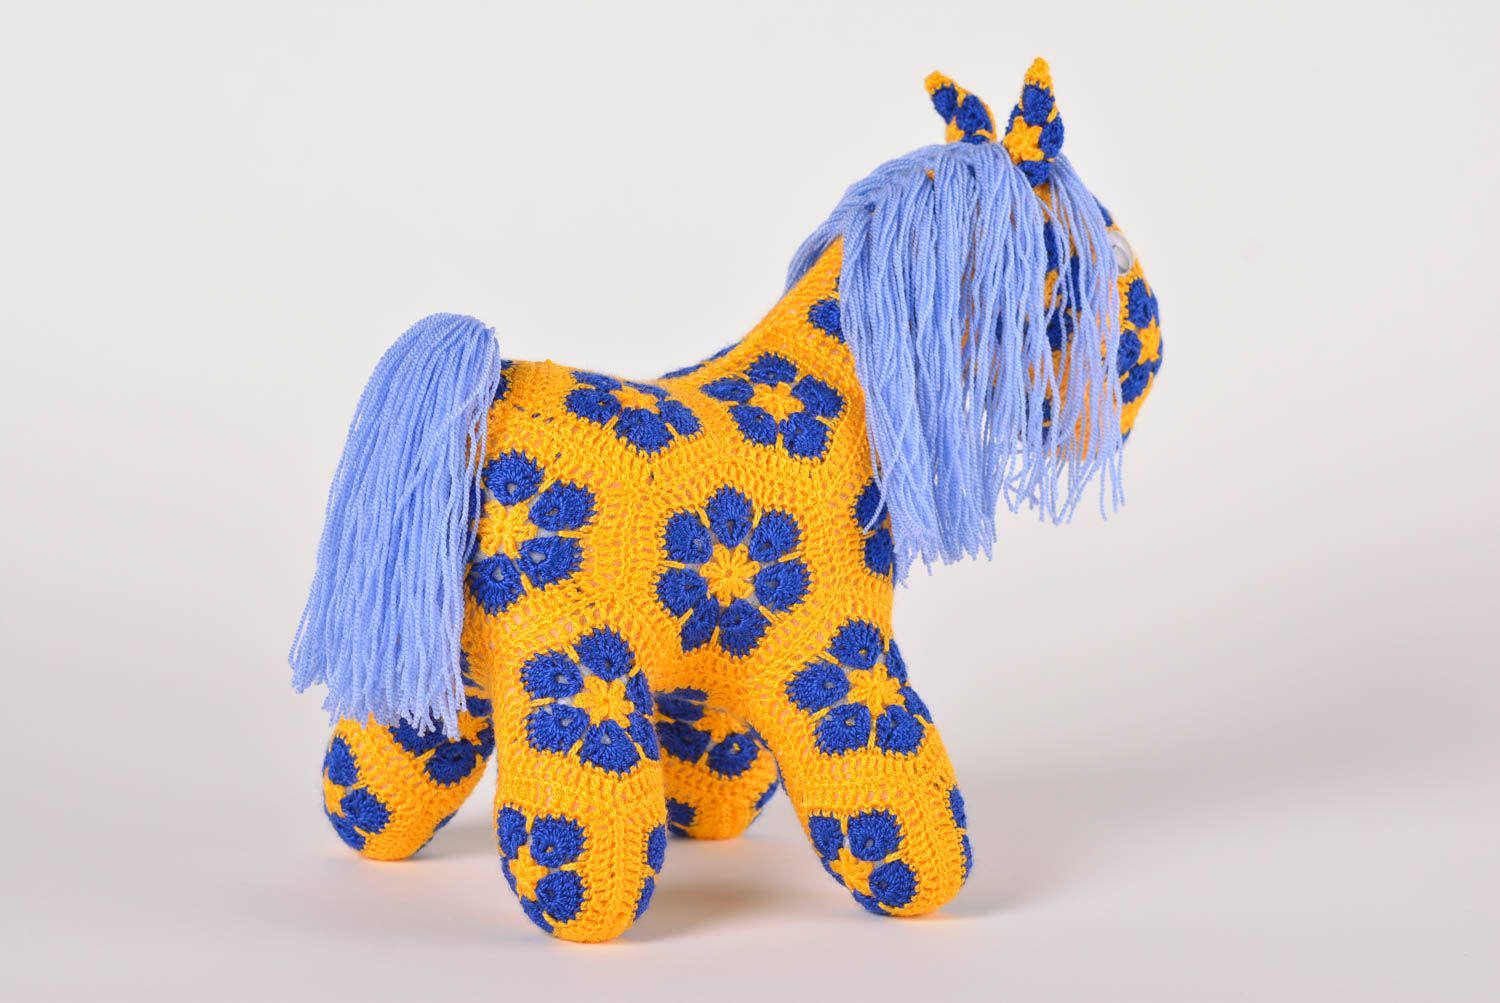 Unusual handmade crochet soft toy horse stuffed toy birthday gift ideas photo 3